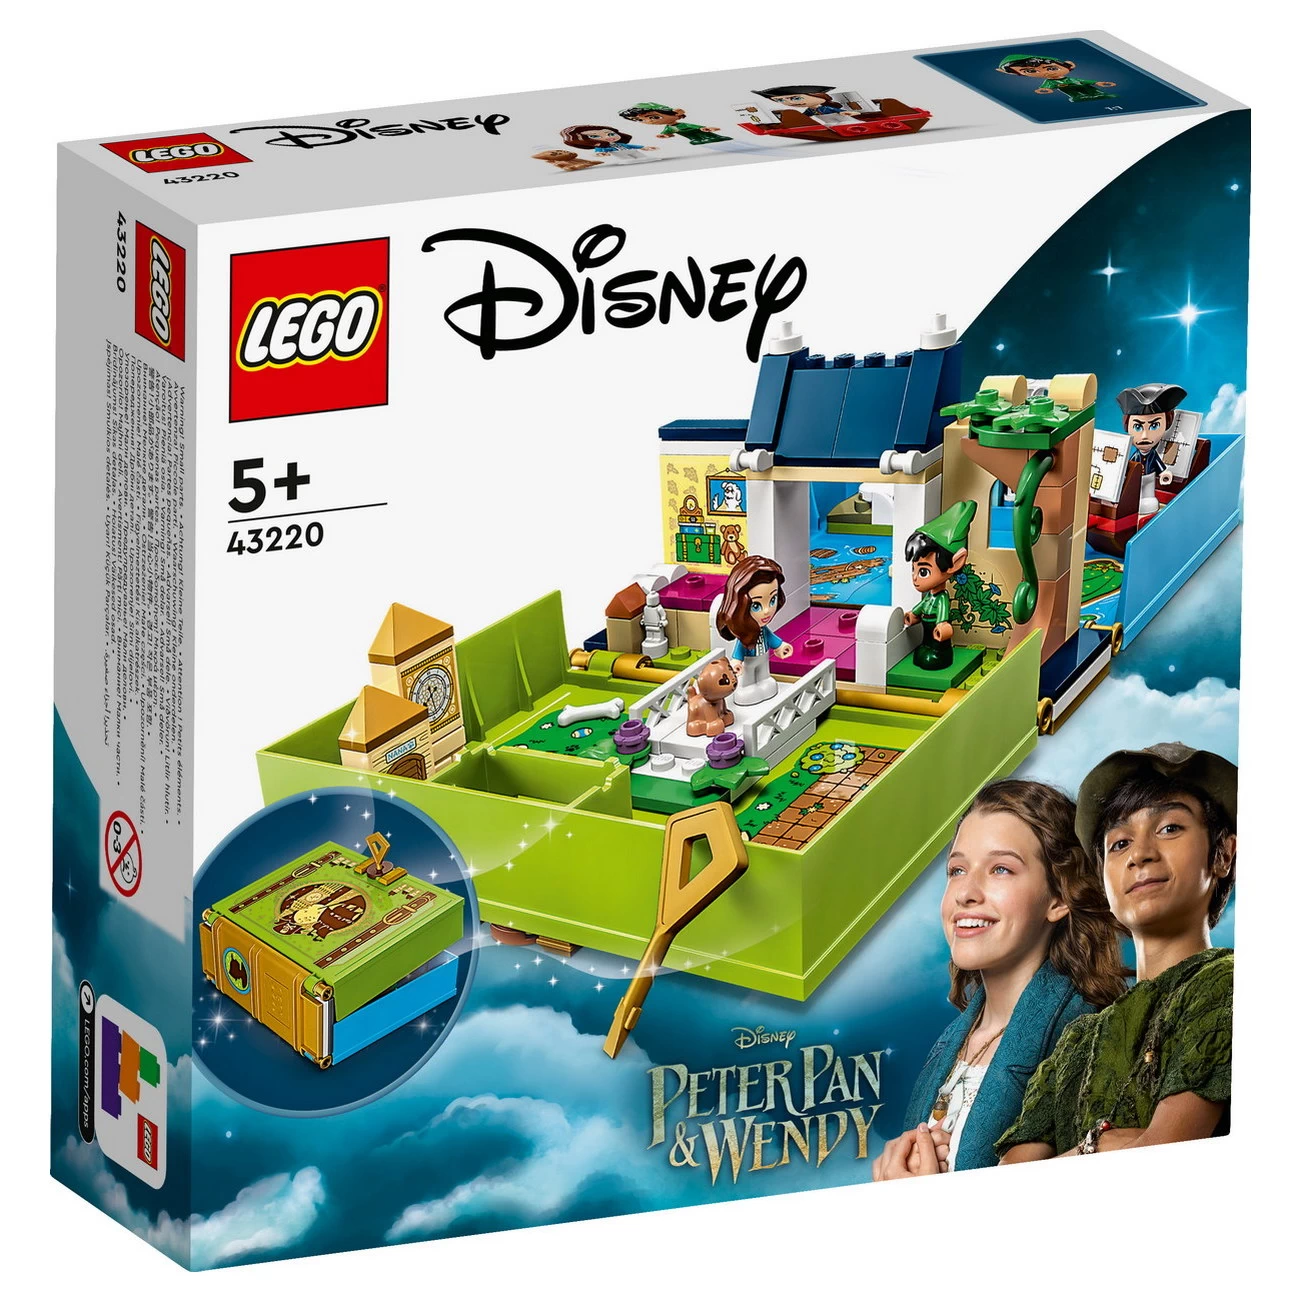 LEGO Disney Princess 43220 - Peter Pan & Wendy - Märchenbuch-Abenteuer